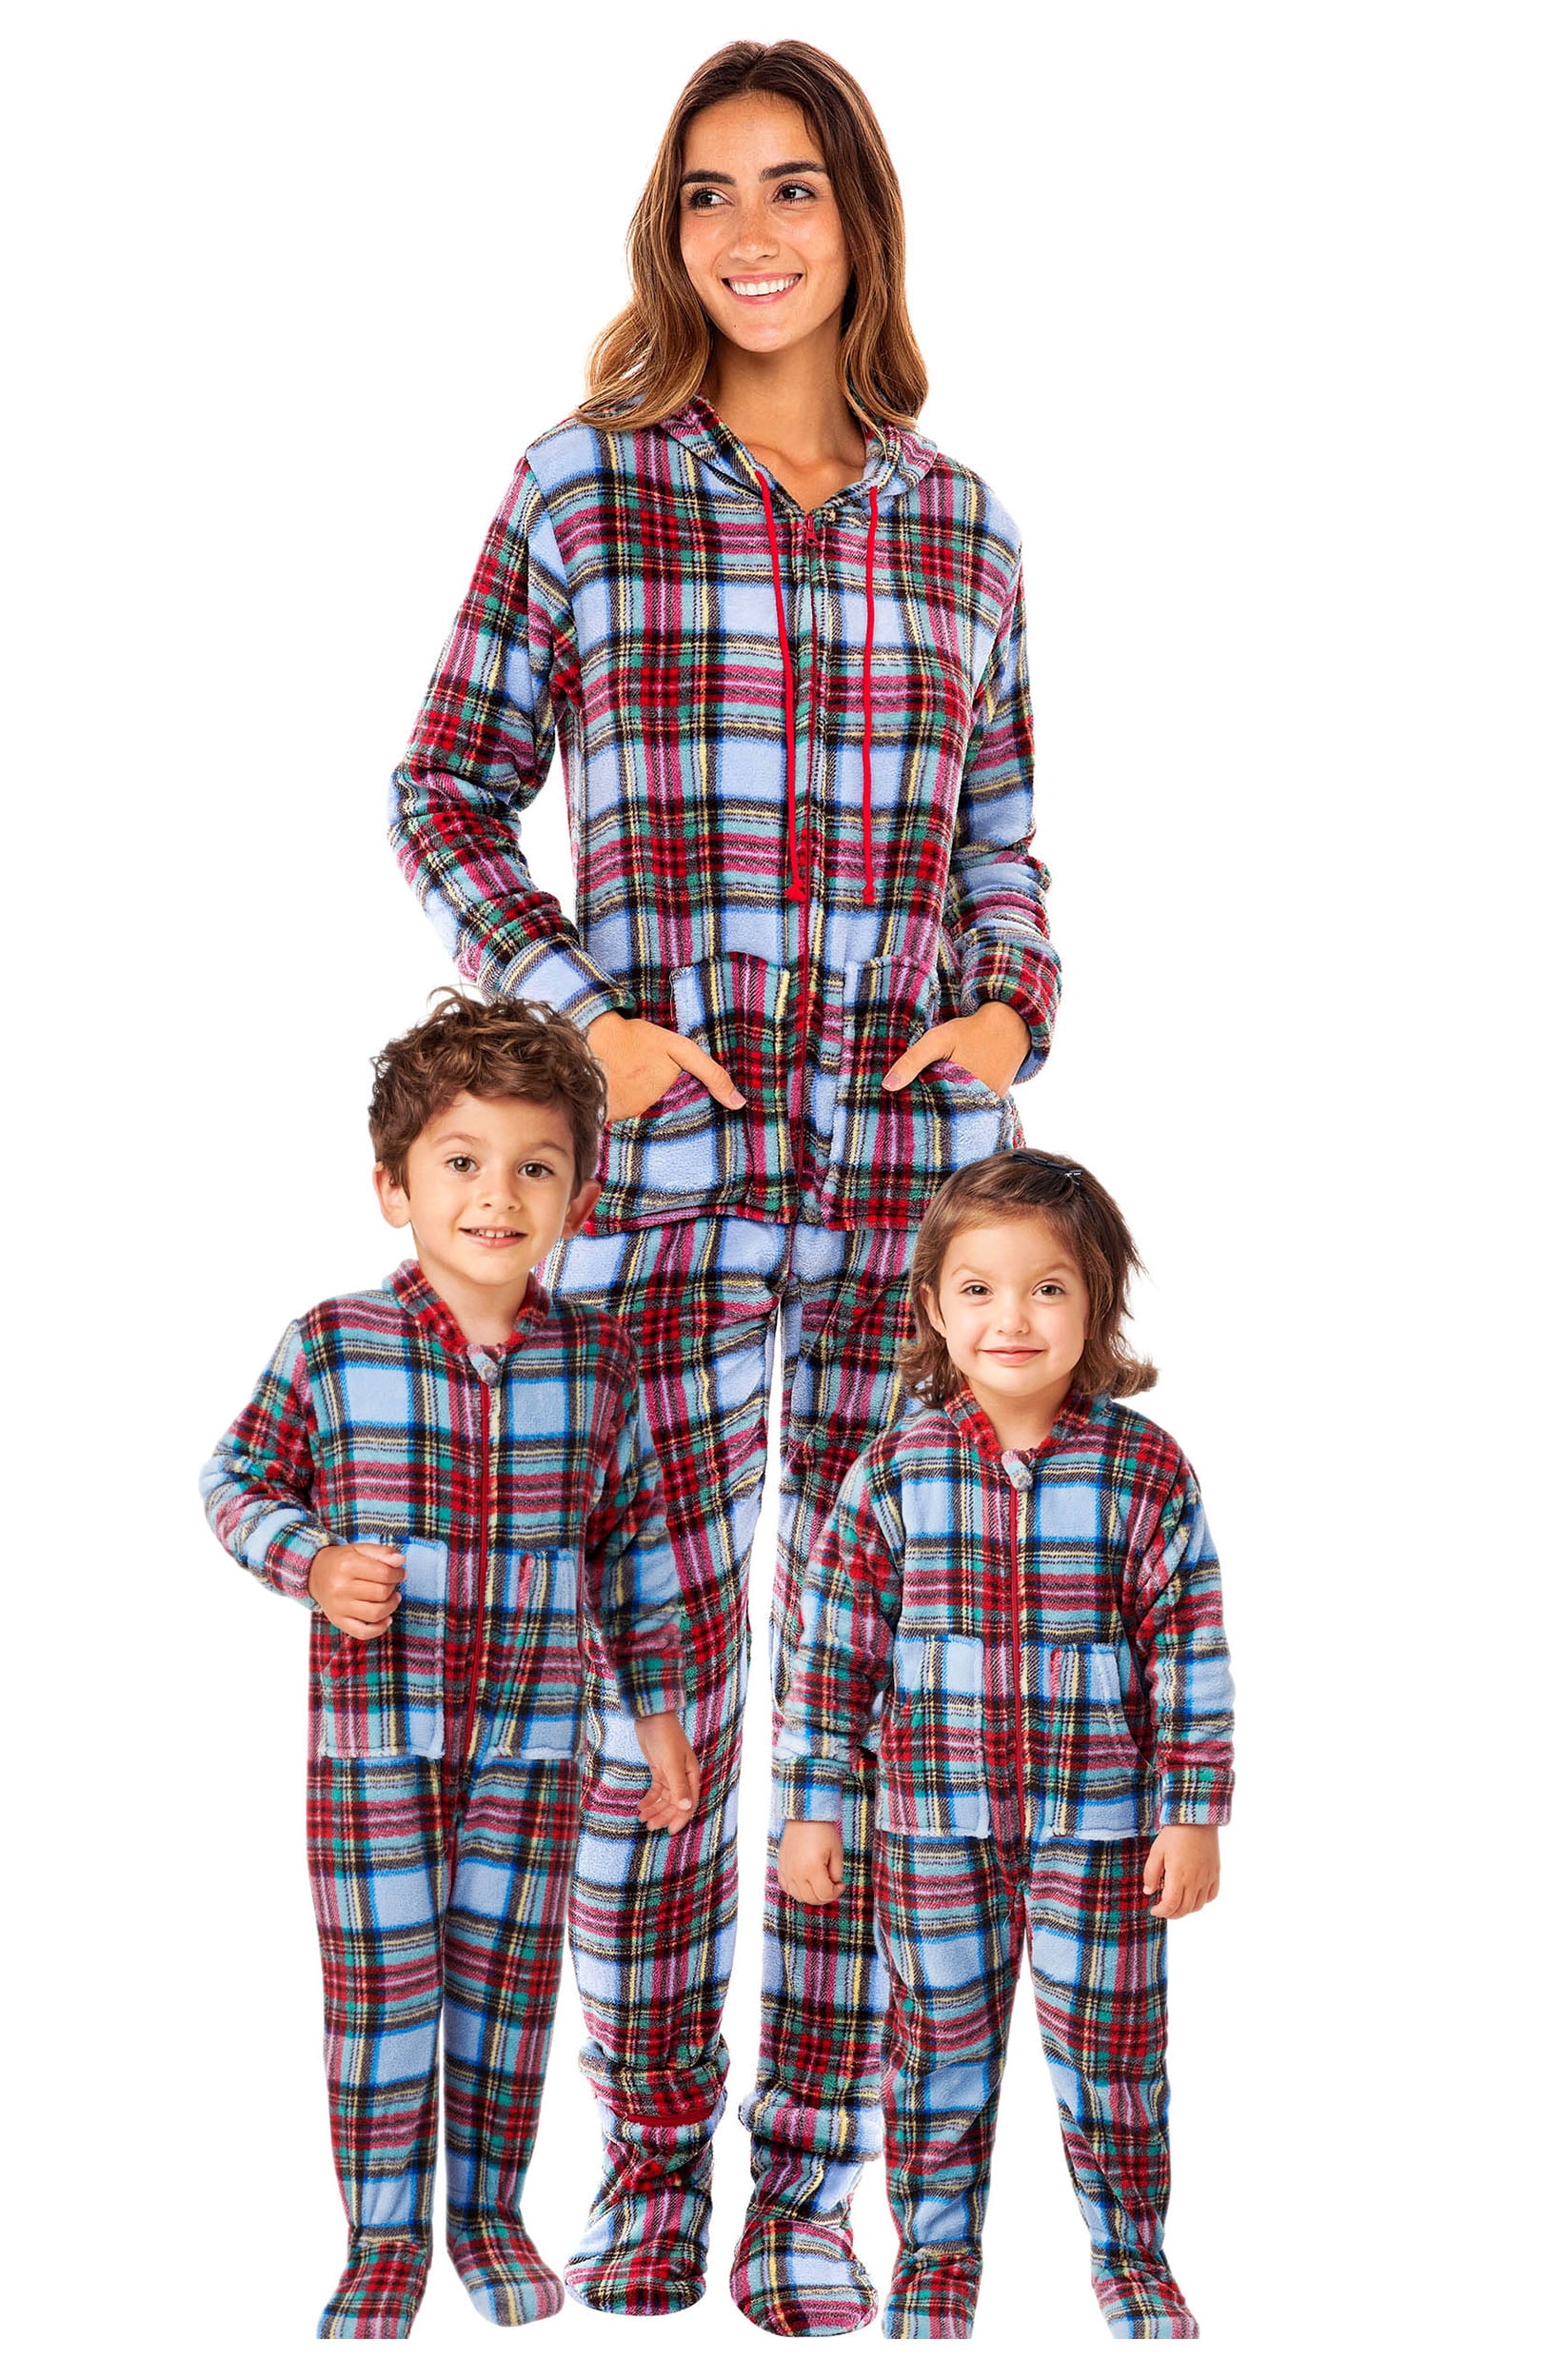 dELiA*s Girls Fox Coral Plush Fleece Long Sleeved Hooded One-Piece Pajamas